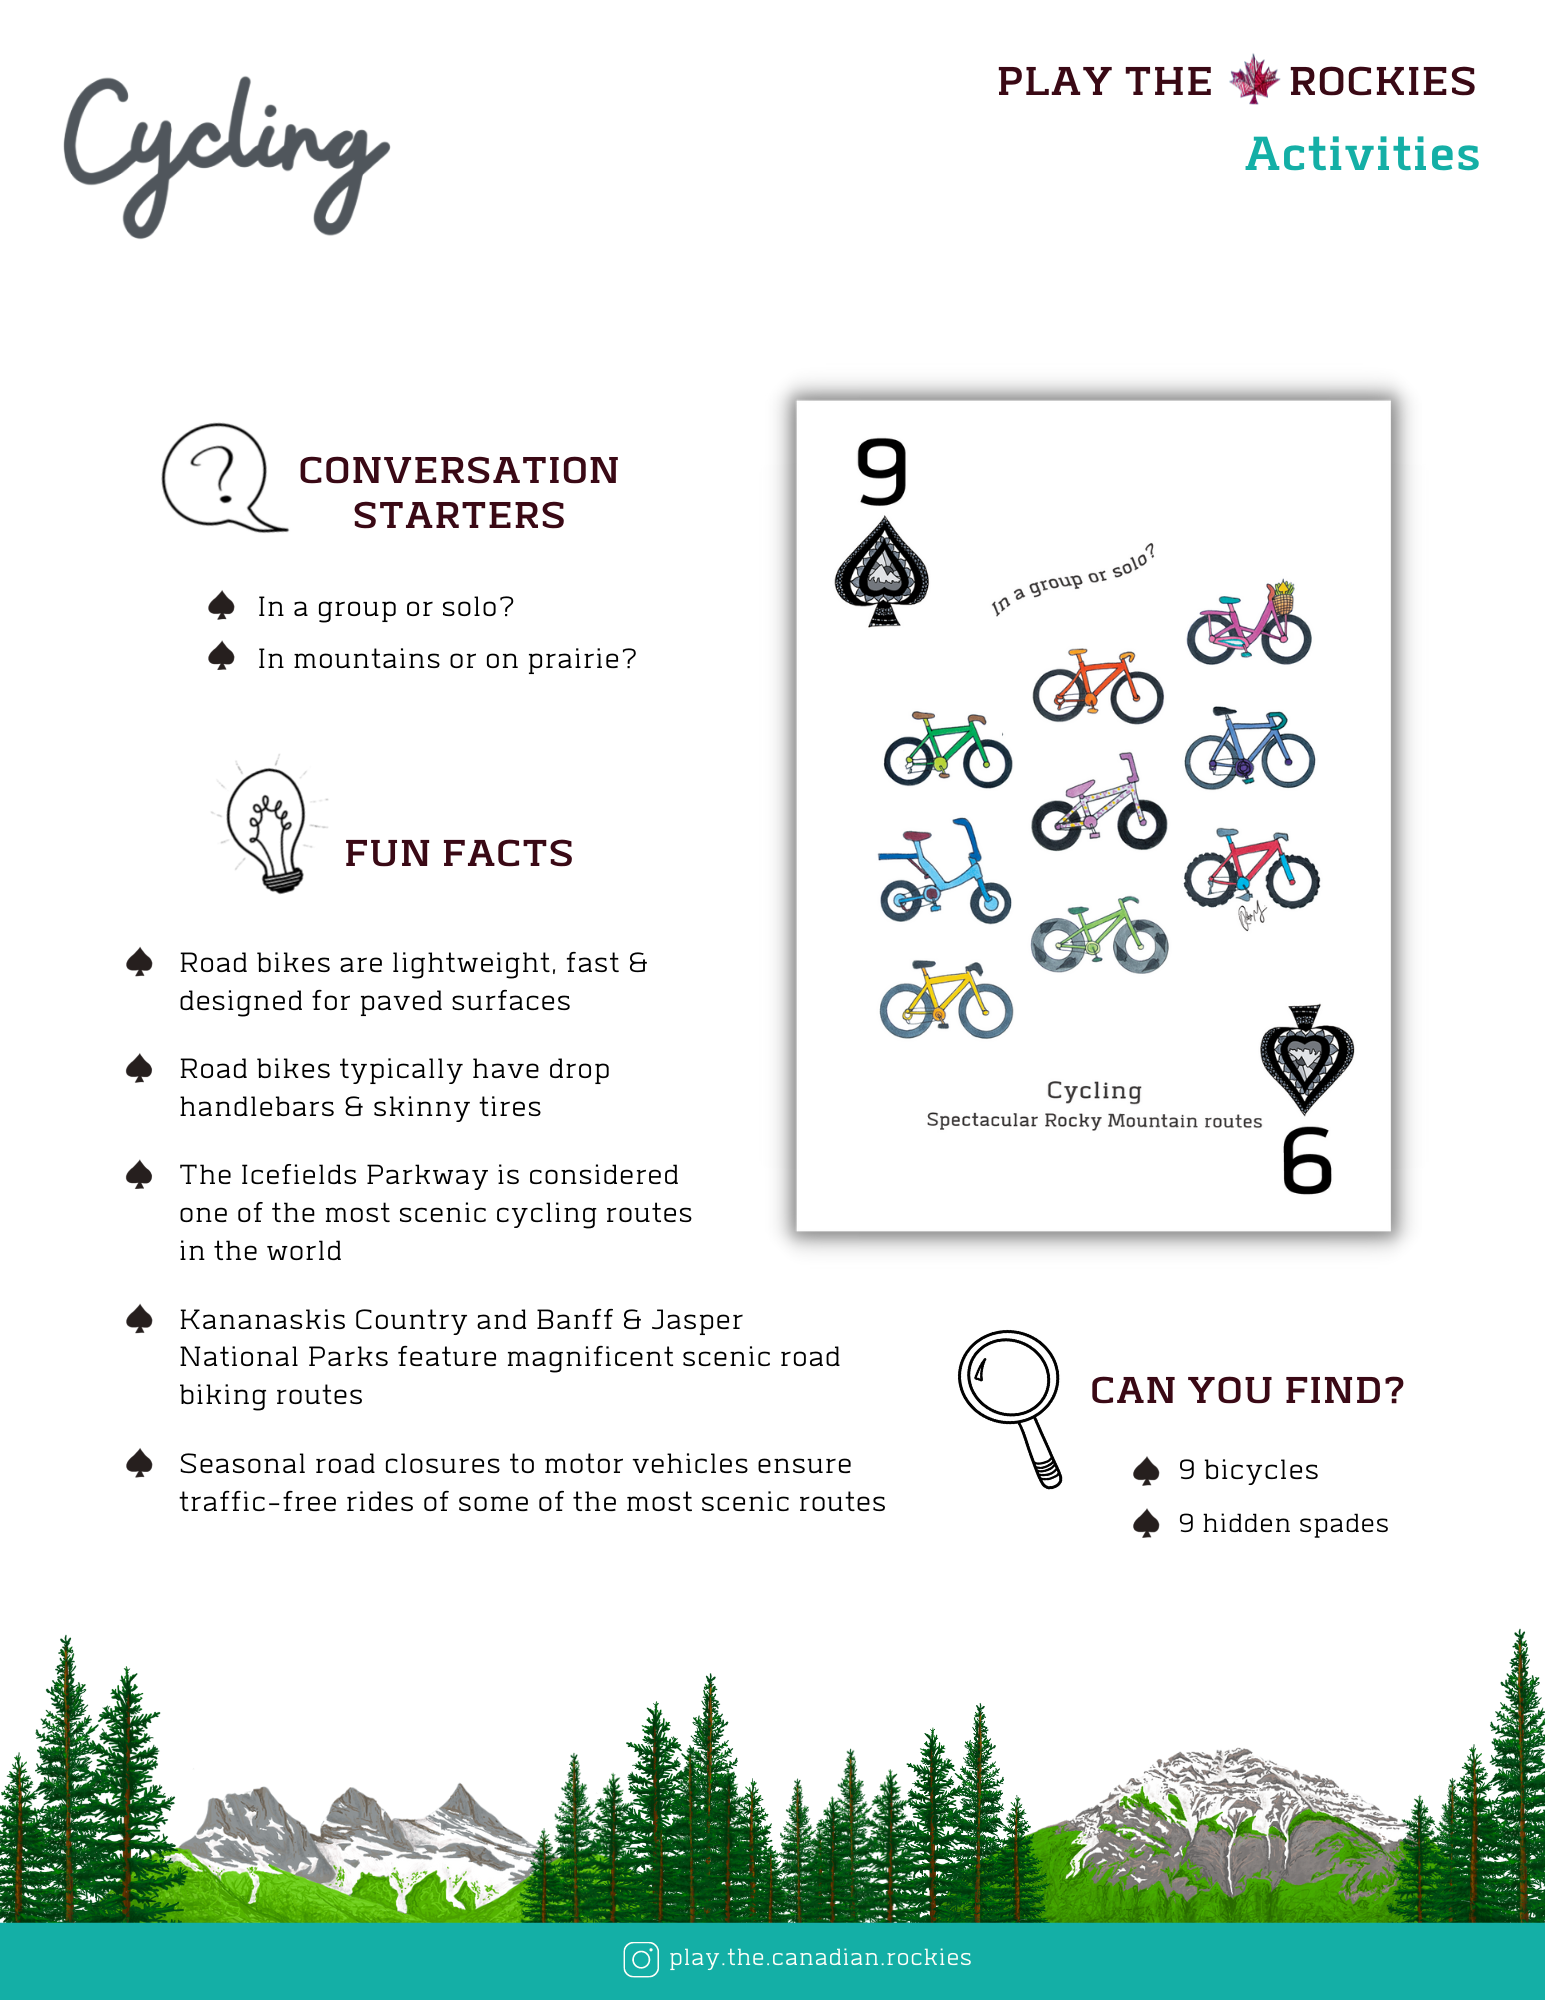 9 Cycling - Activities - Information Sheet